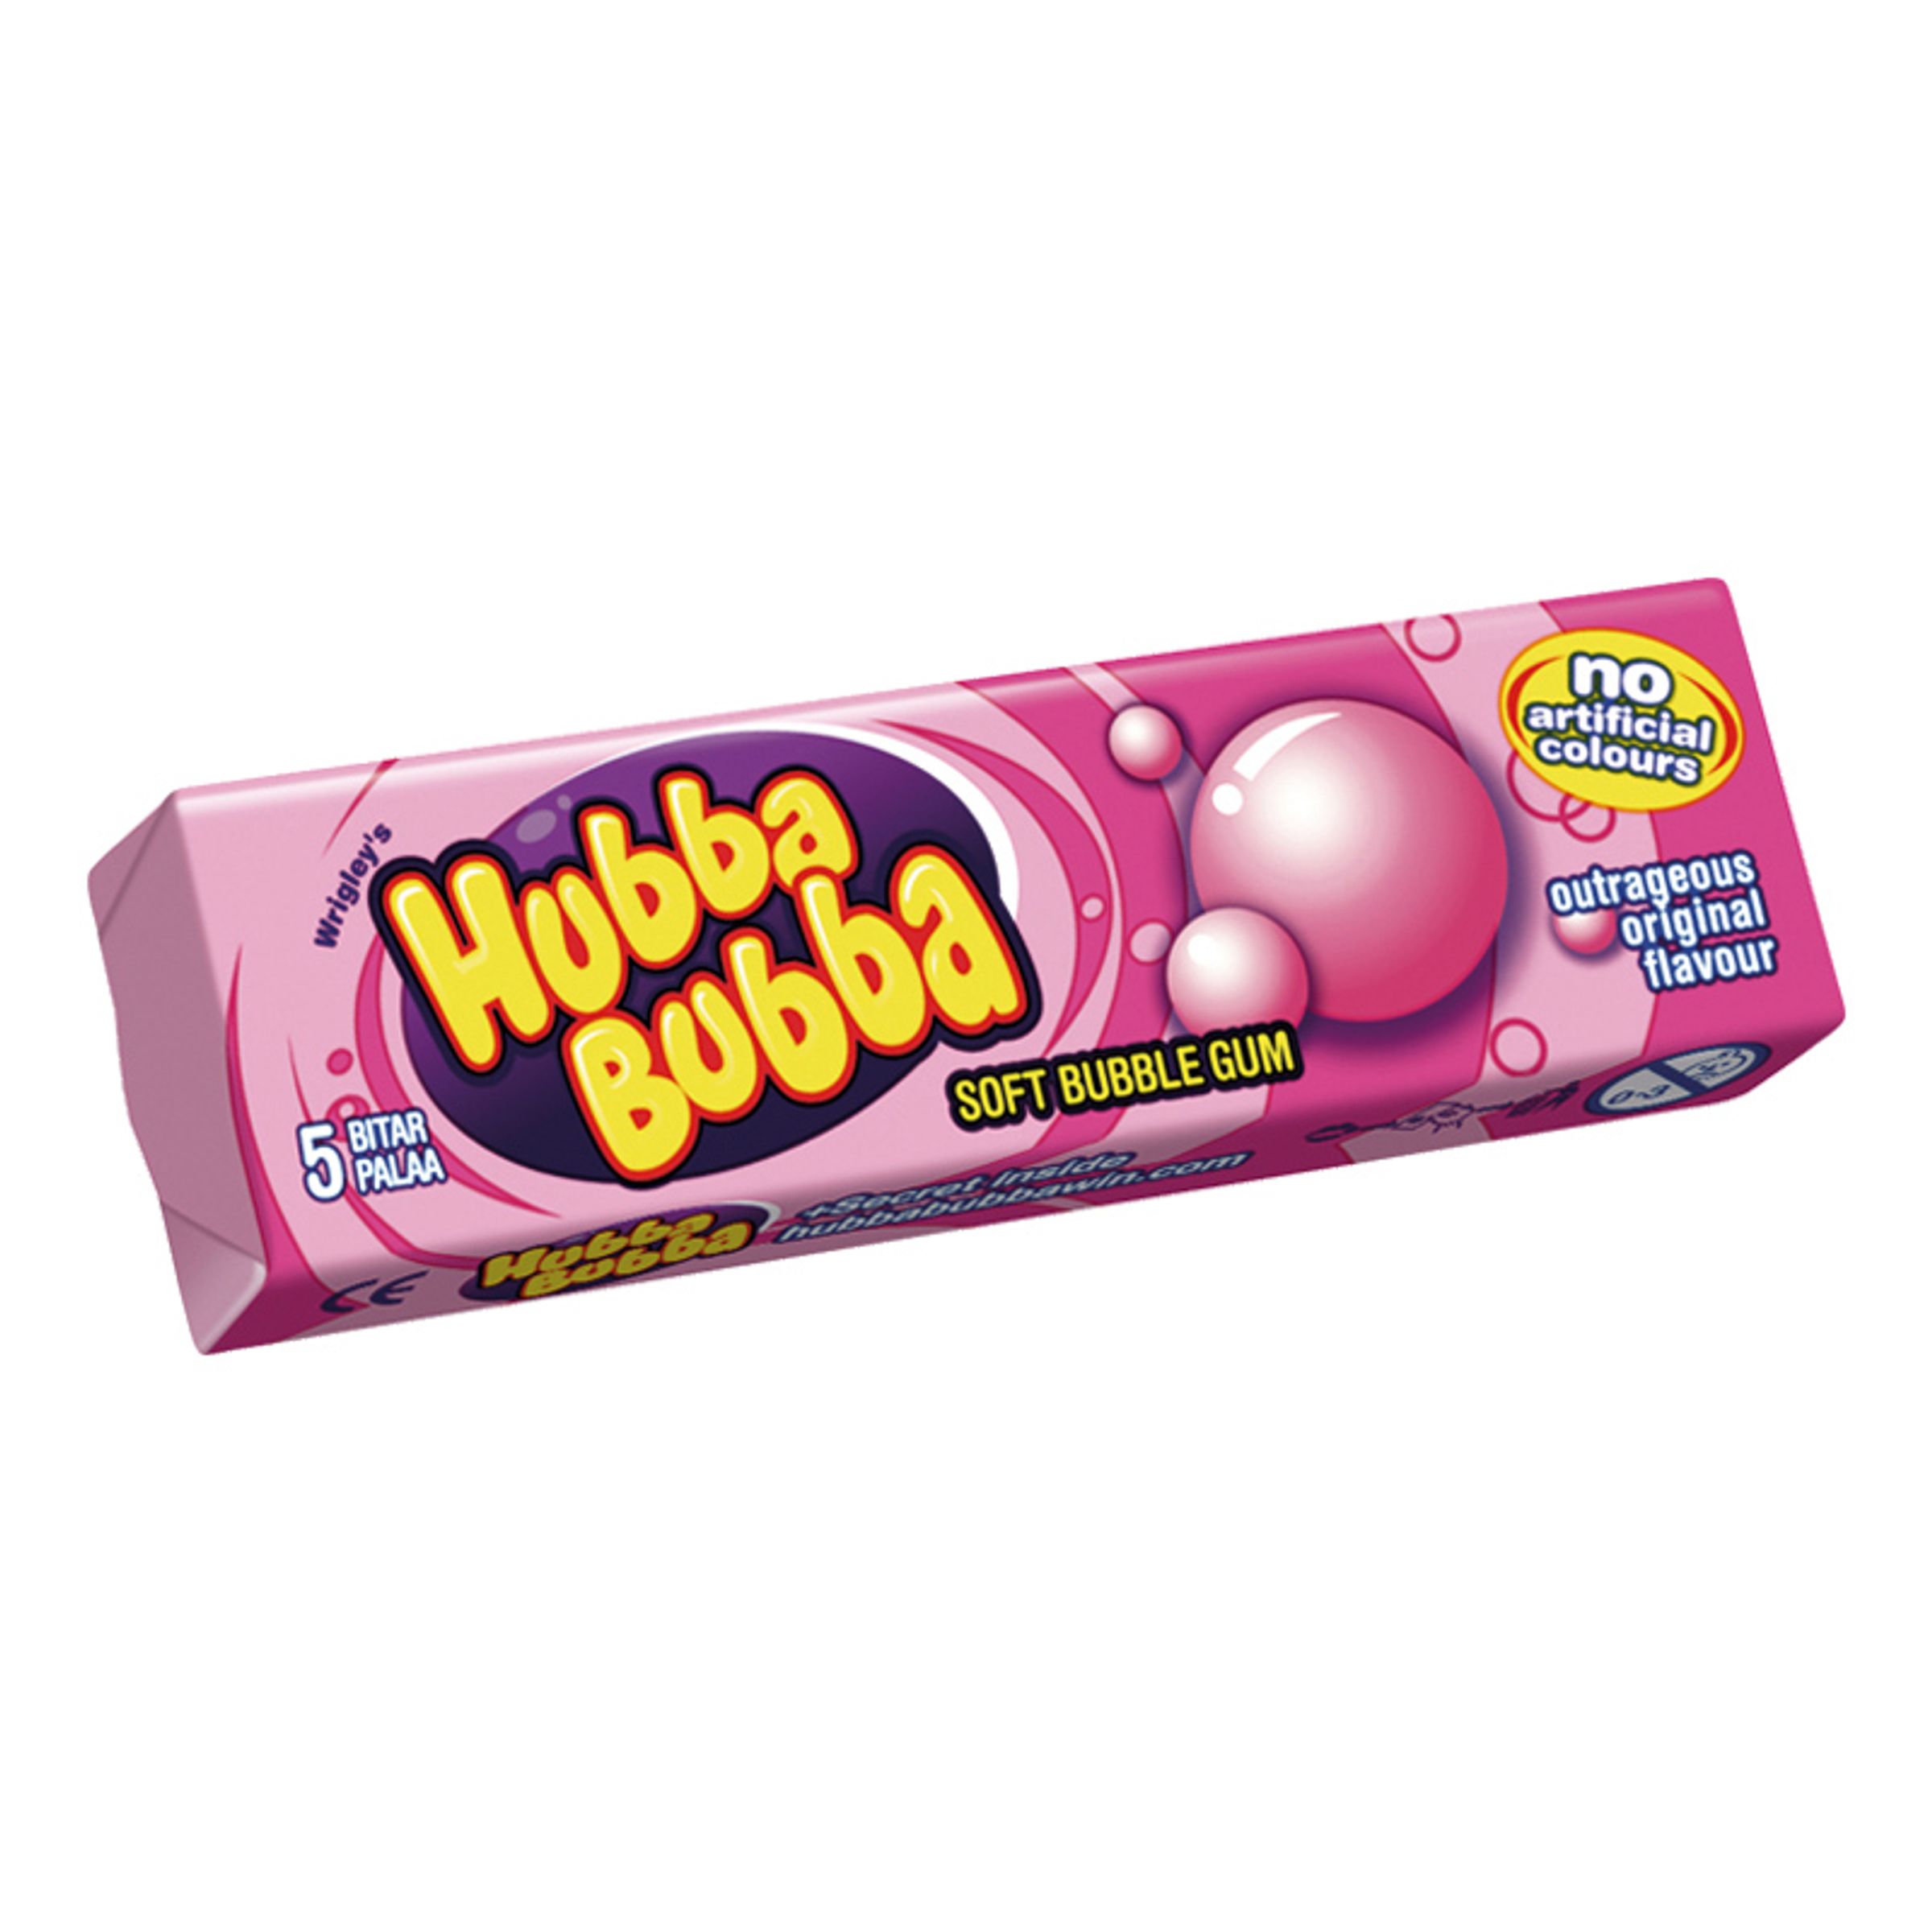 Hubba Bubba Original - 1-pack